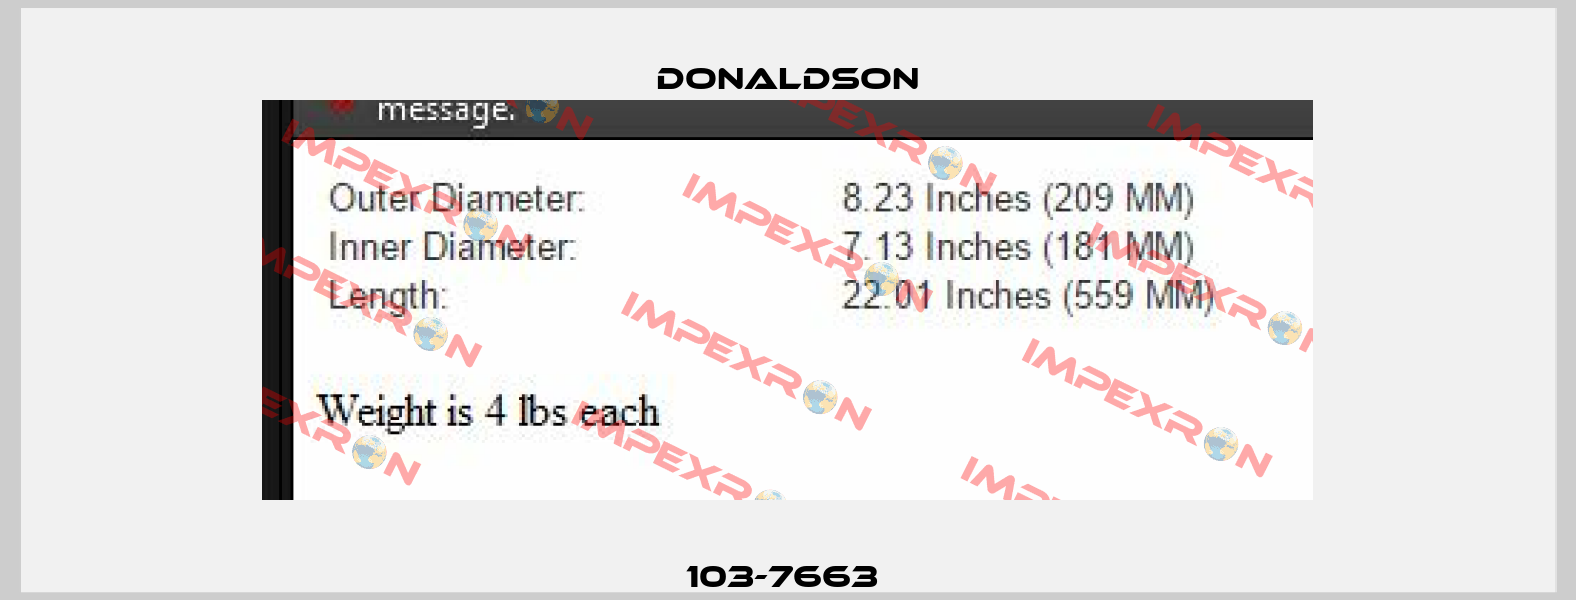 103-7663  Donaldson